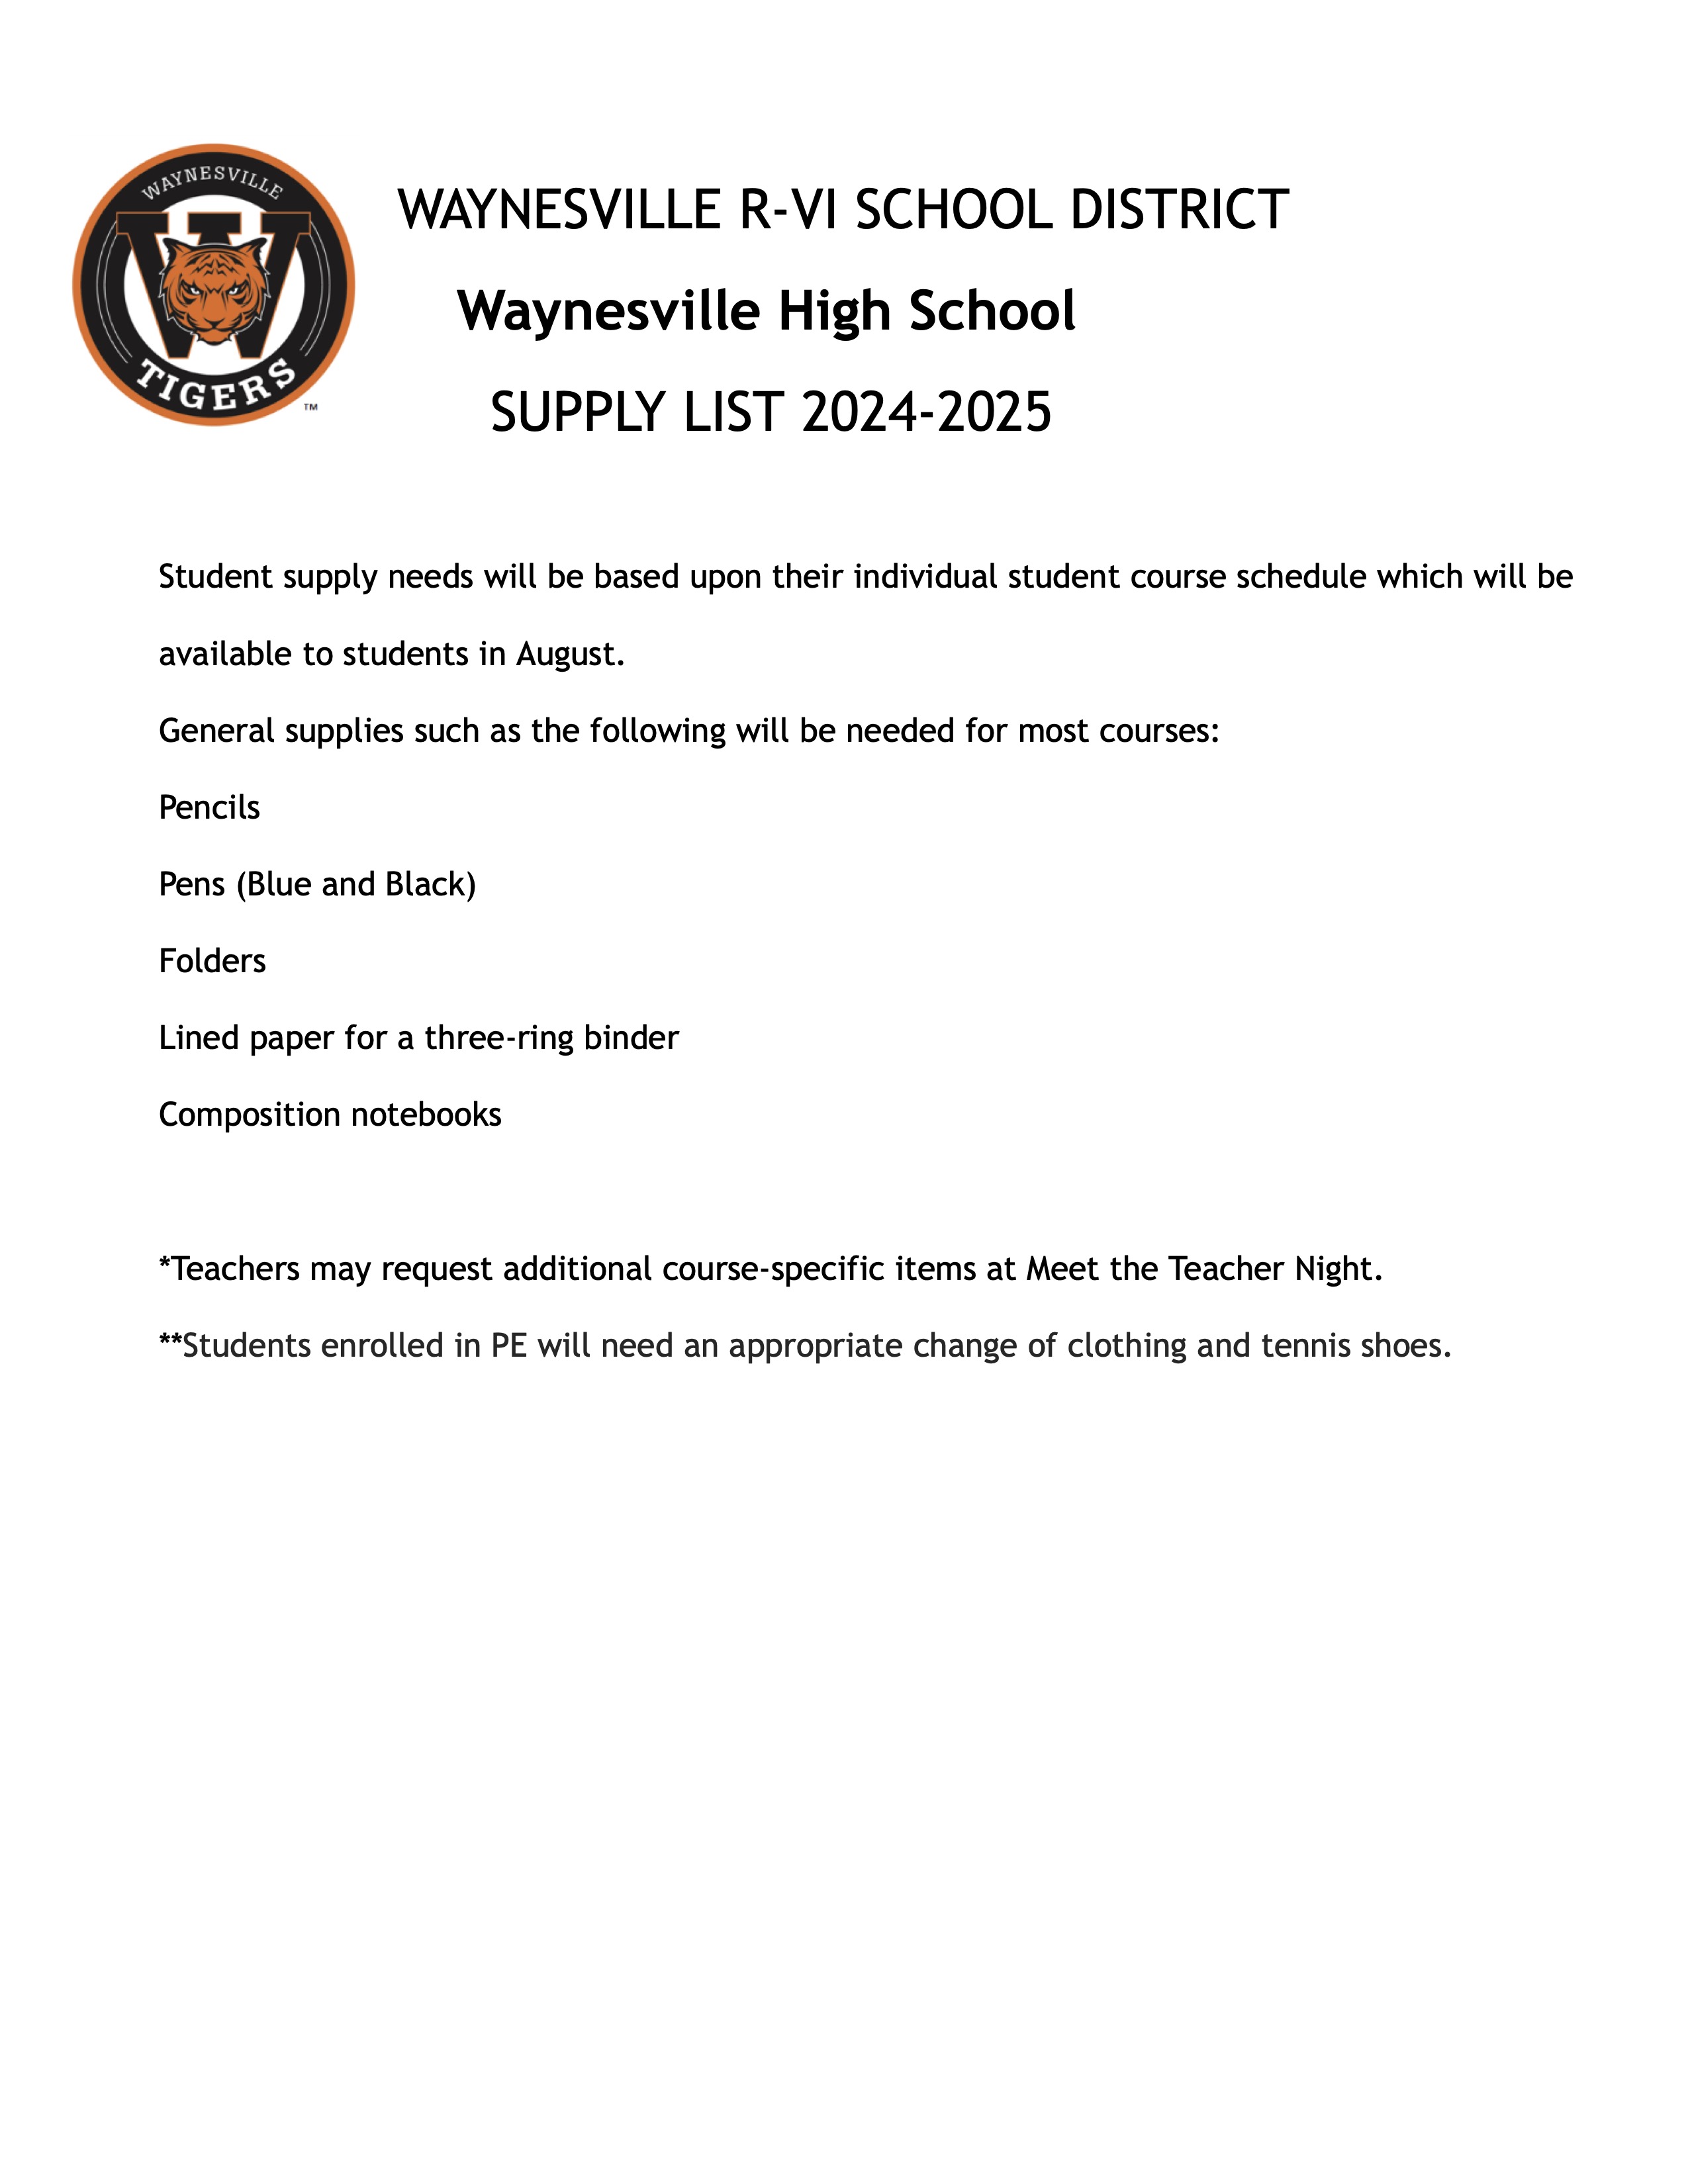 Waynesville High School Supply List